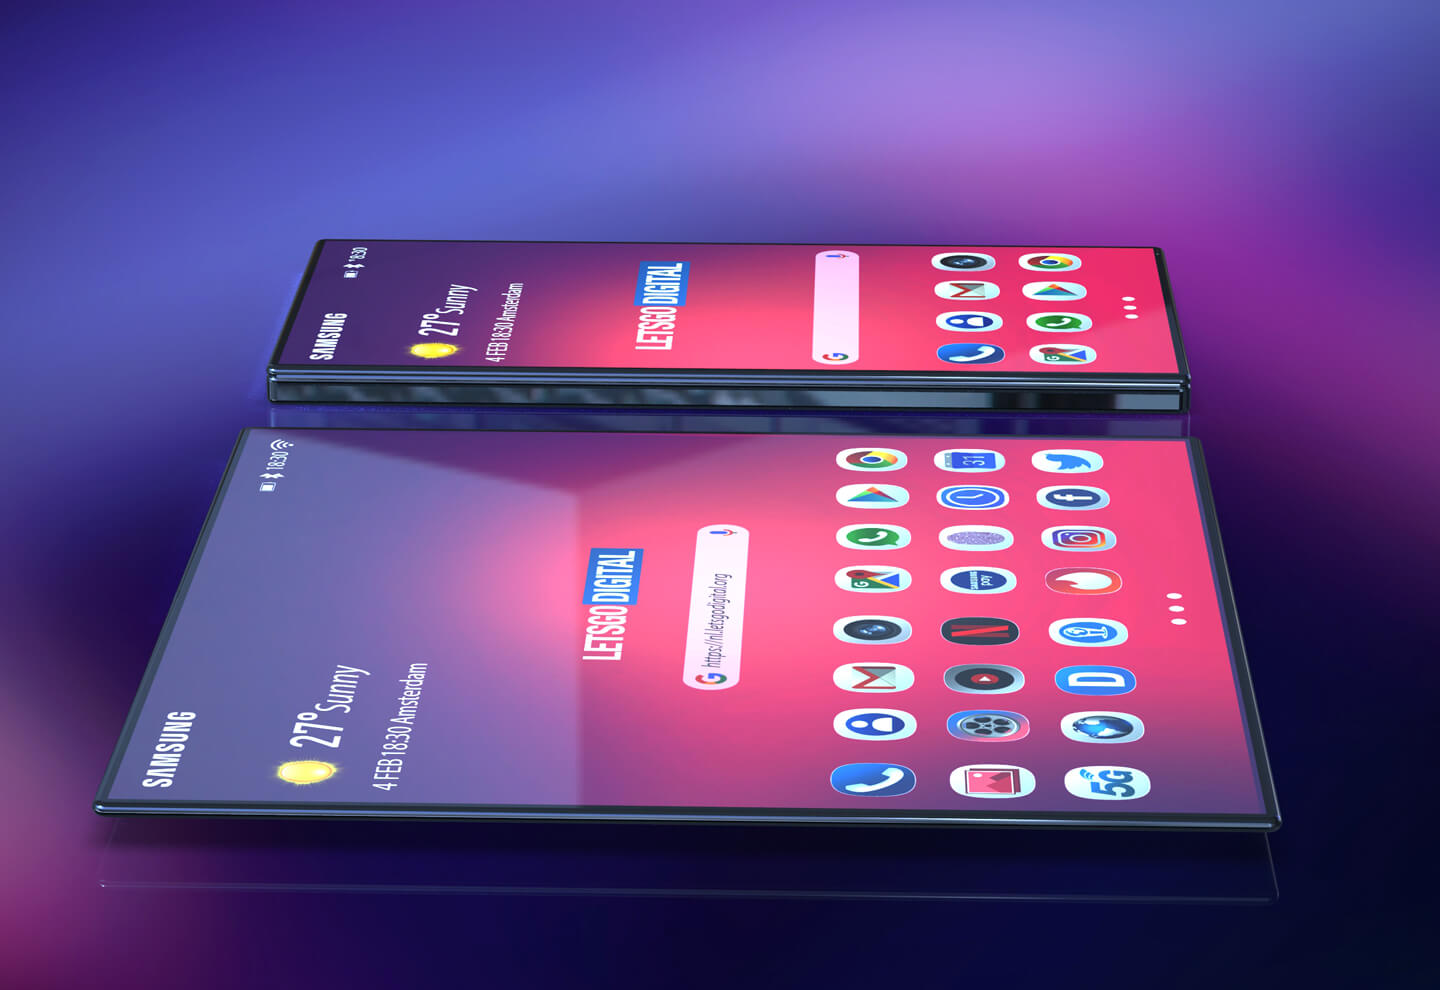 Samsung Galaxy foldable phone